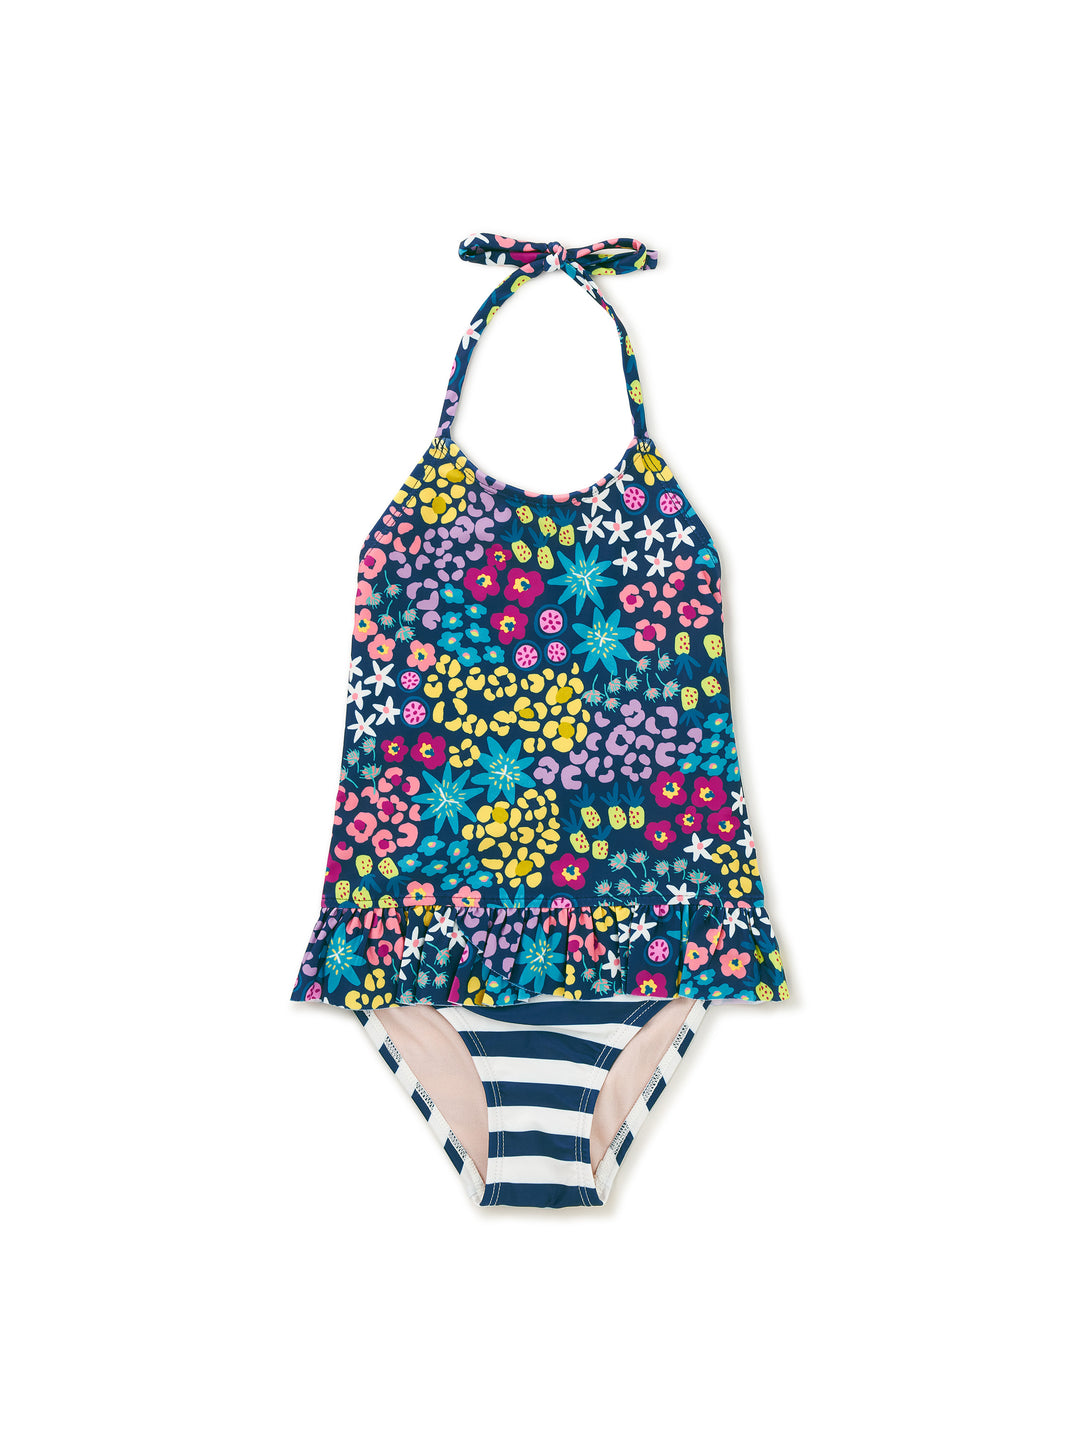 Tea Collection Peplum One-Piece Swimsuit, Watamu Tropical Floral |Mockingbird Baby & Kids